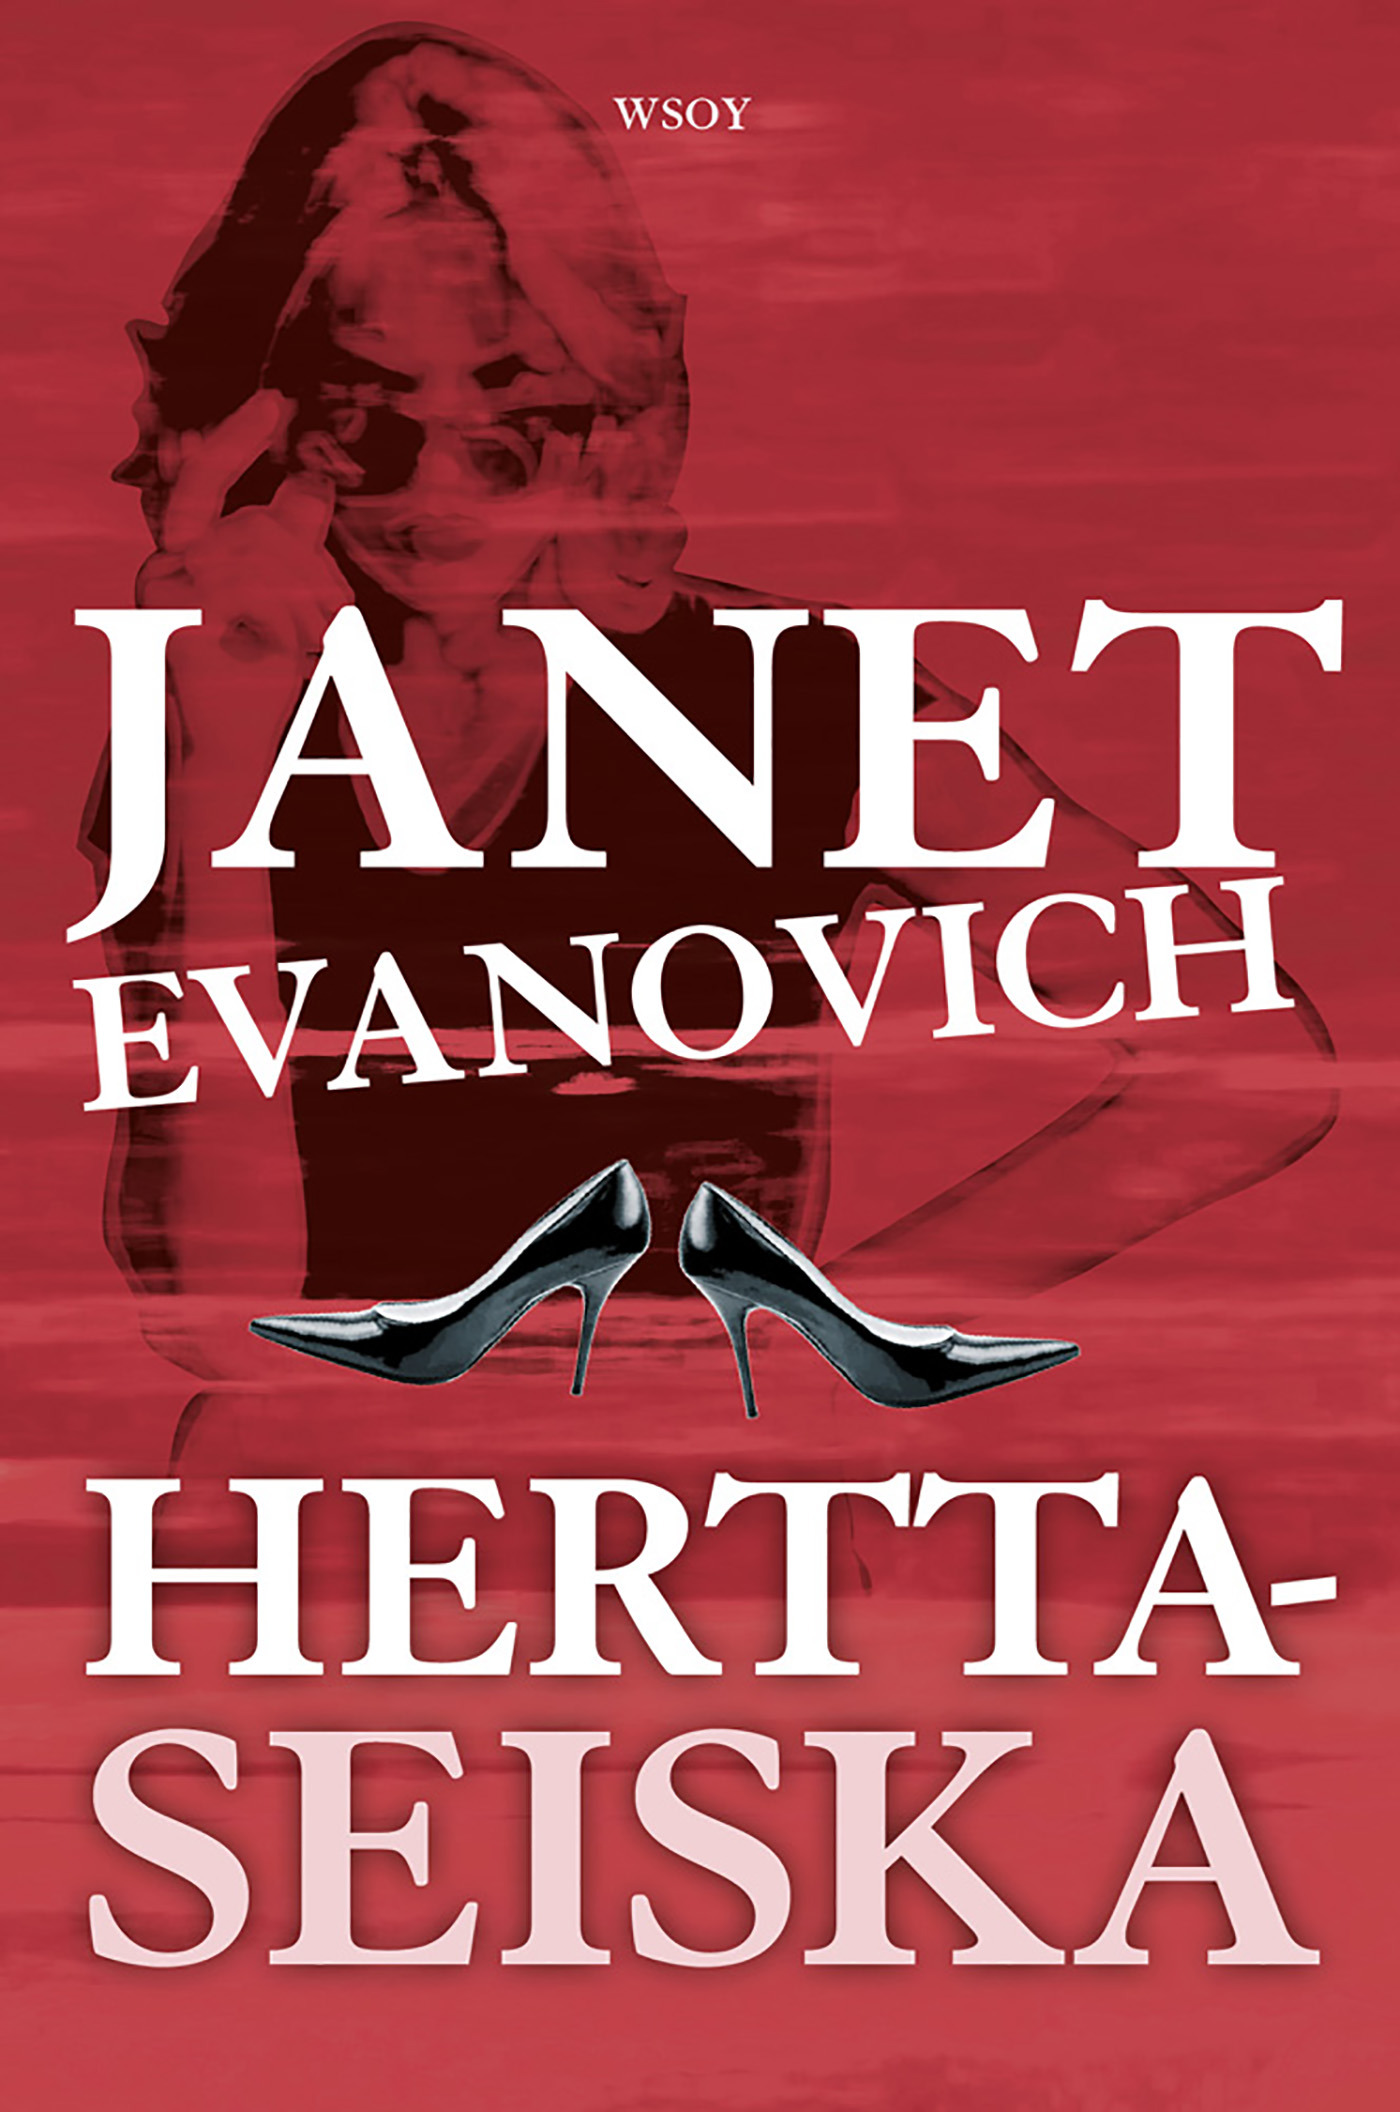 Evanovich, Janet - Herttaseiska, e-kirja